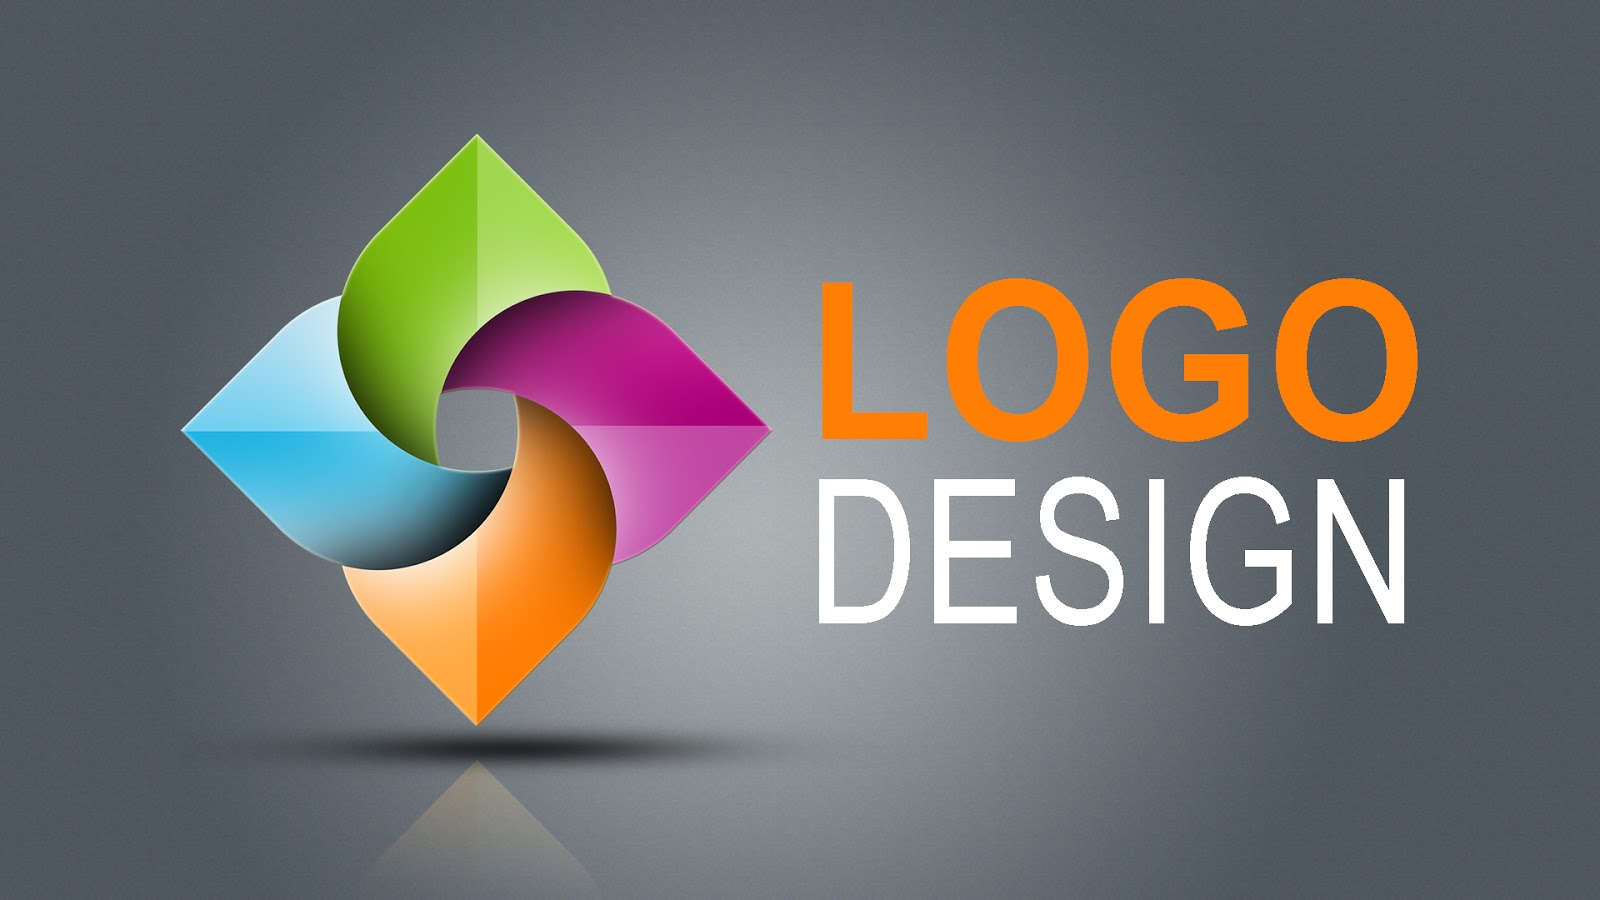 Photoshop tutorial professional logo design in hindi urdu - sahak graphics